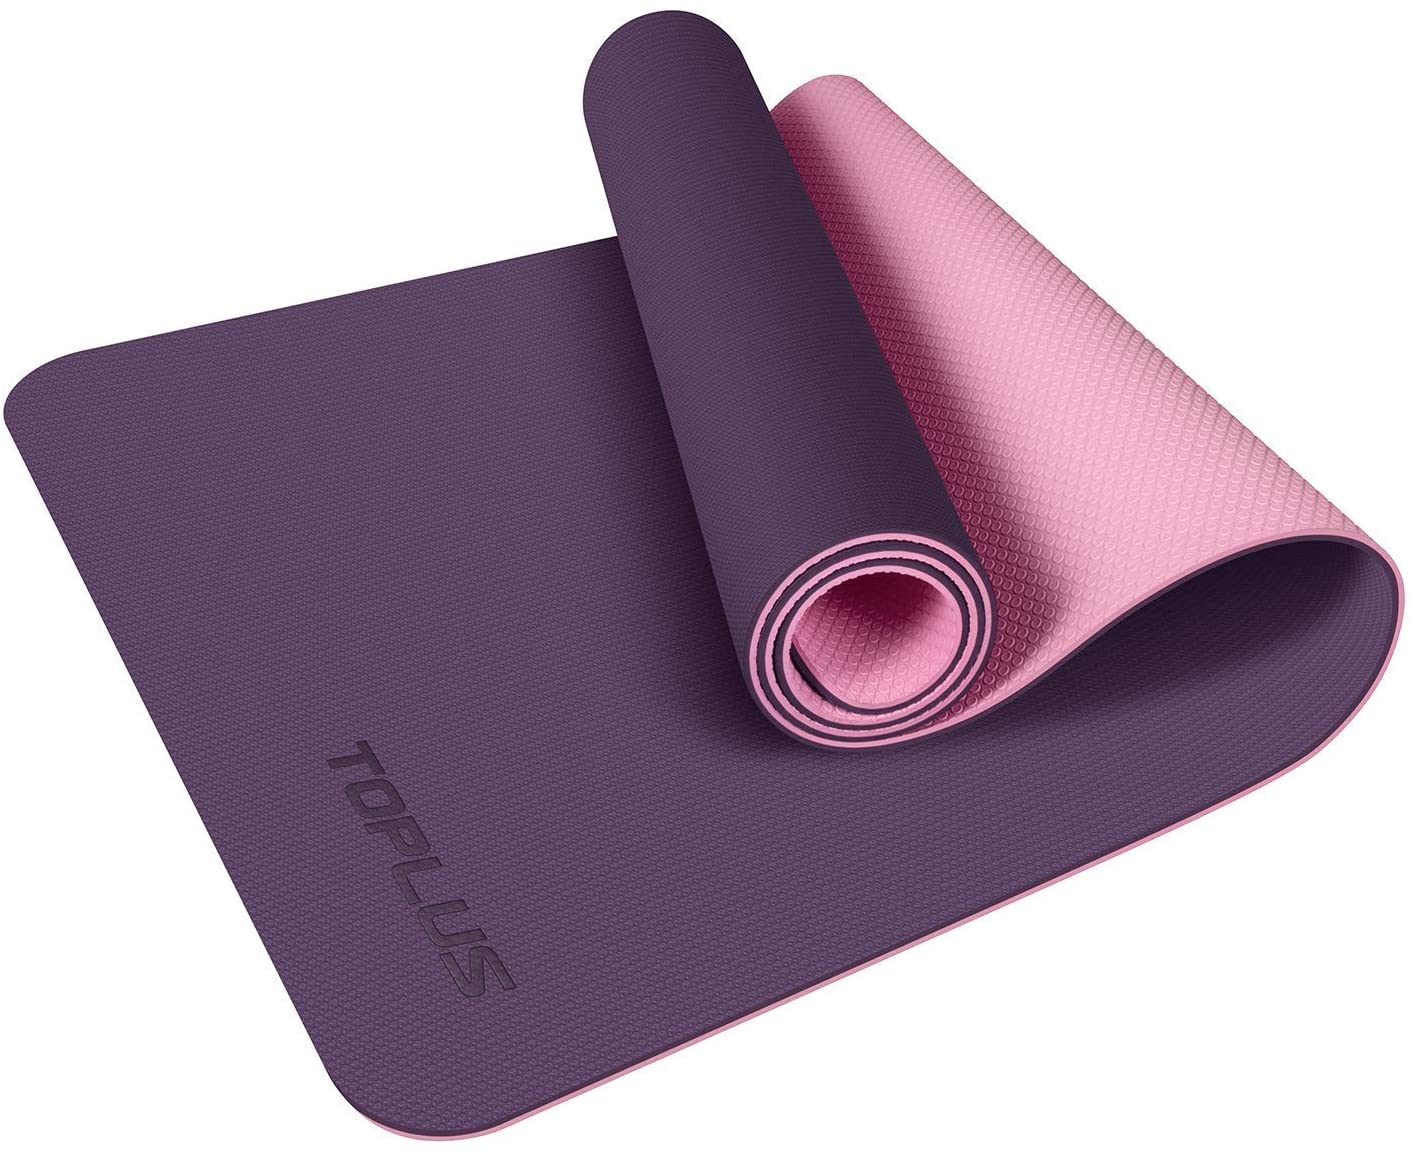 TOPLUS Yoga Mat Non-Slip